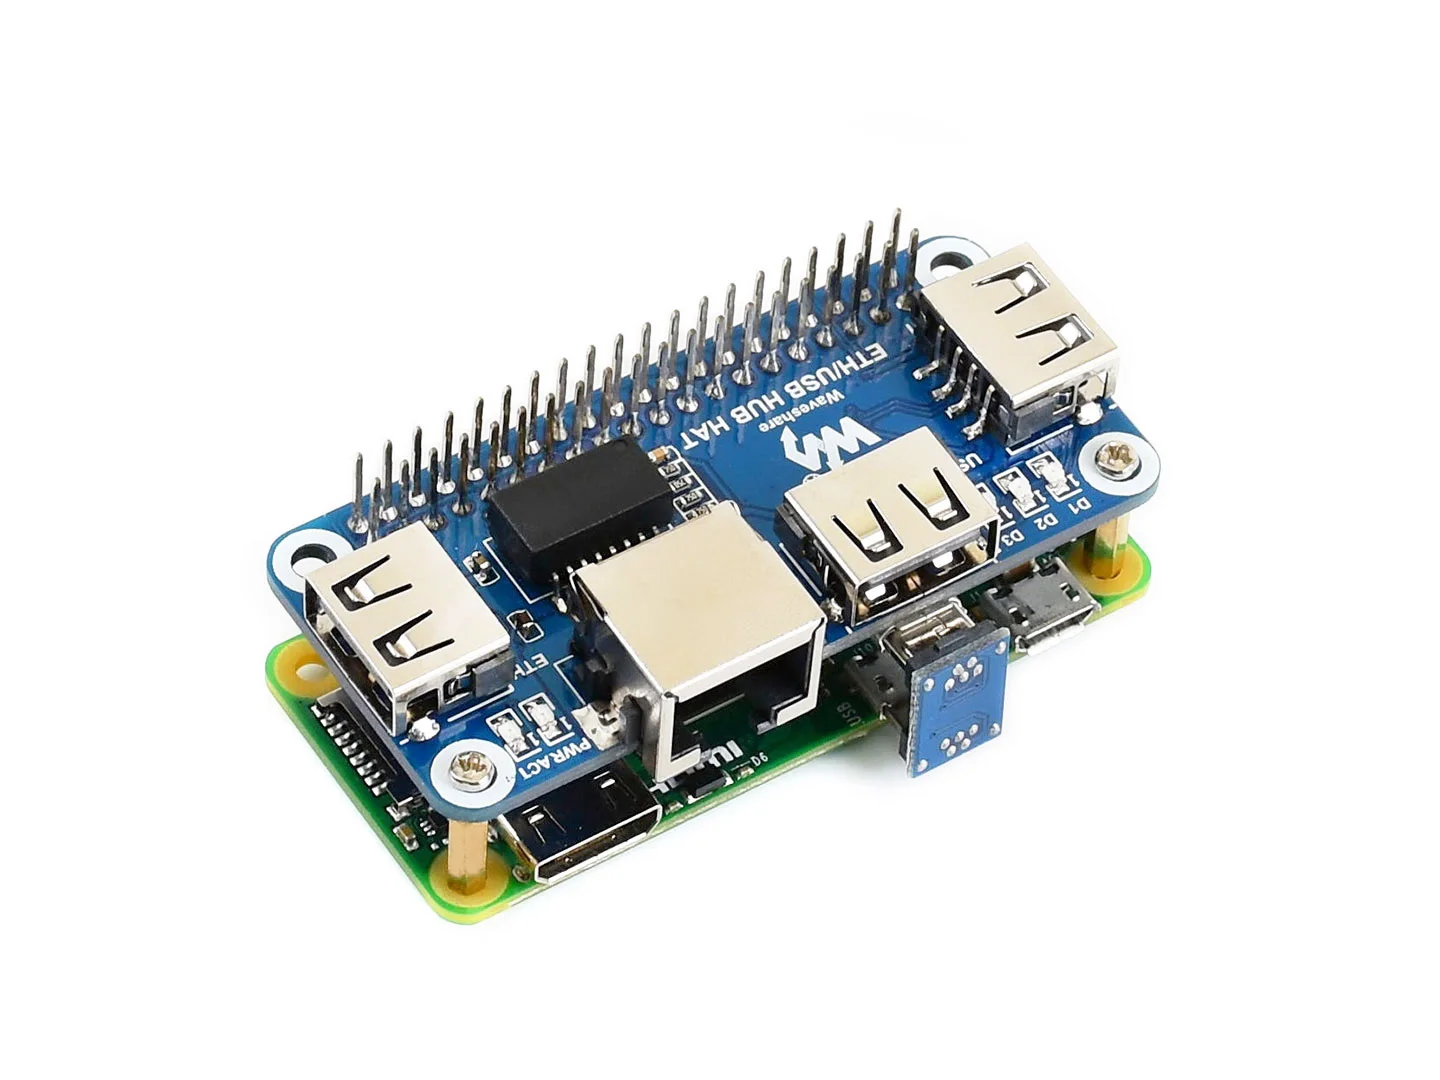 Waveshare Ethernet/usb-хаб шапка для Raspberry Pi 1x RJ45 Ethernet Порты и разъёмы 3x USB s | Компьютеры офис